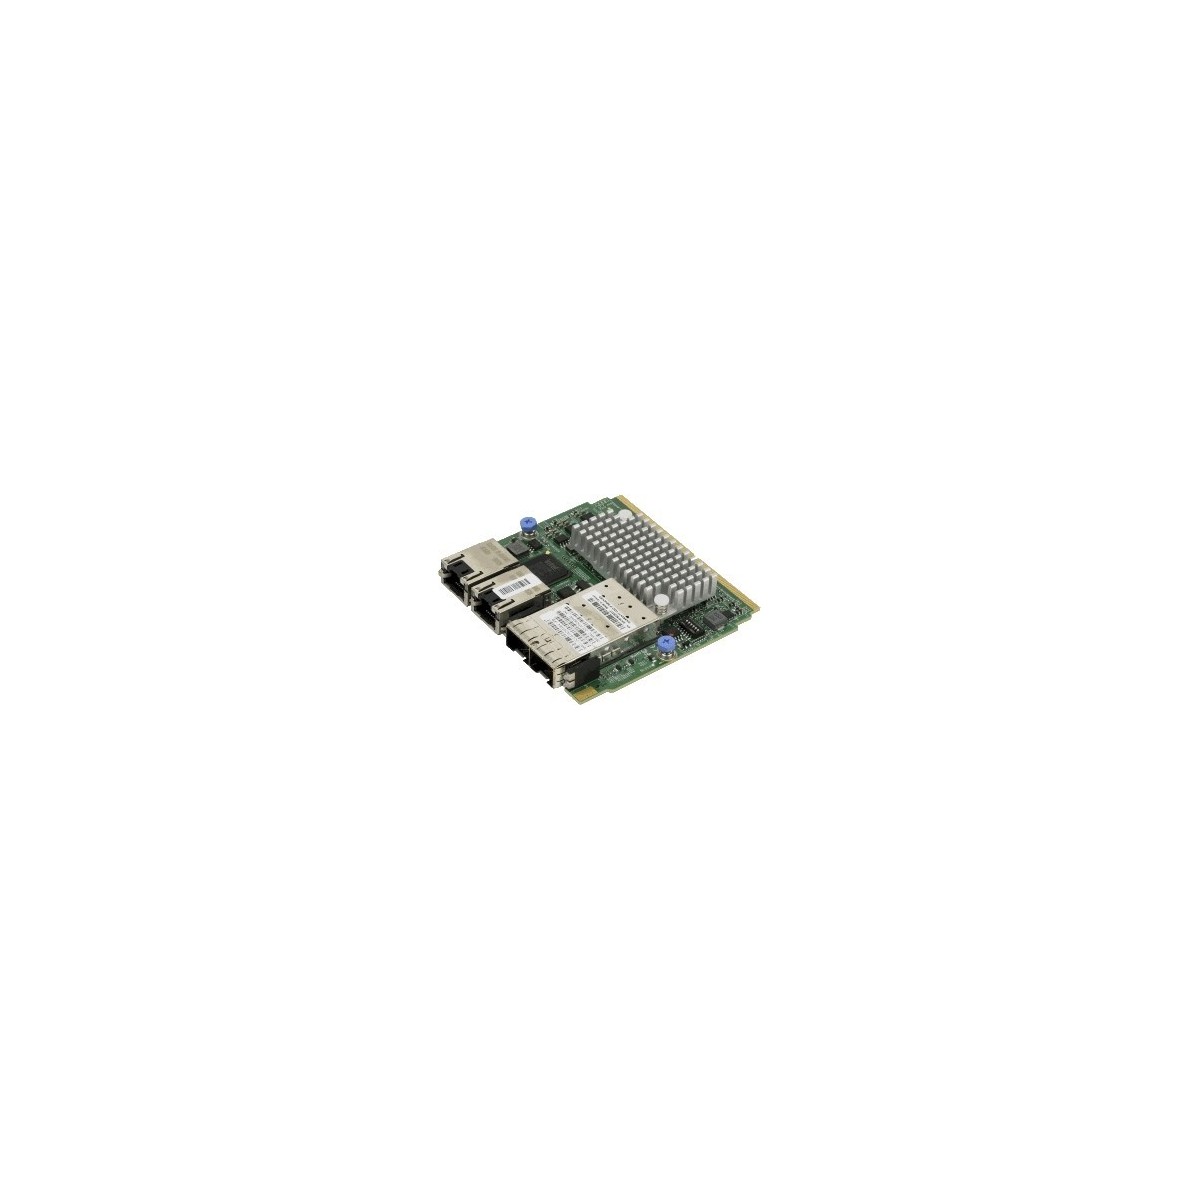 Supermicro Add-on Card SIOM 2+2-port 25G  GbE - Interface Card